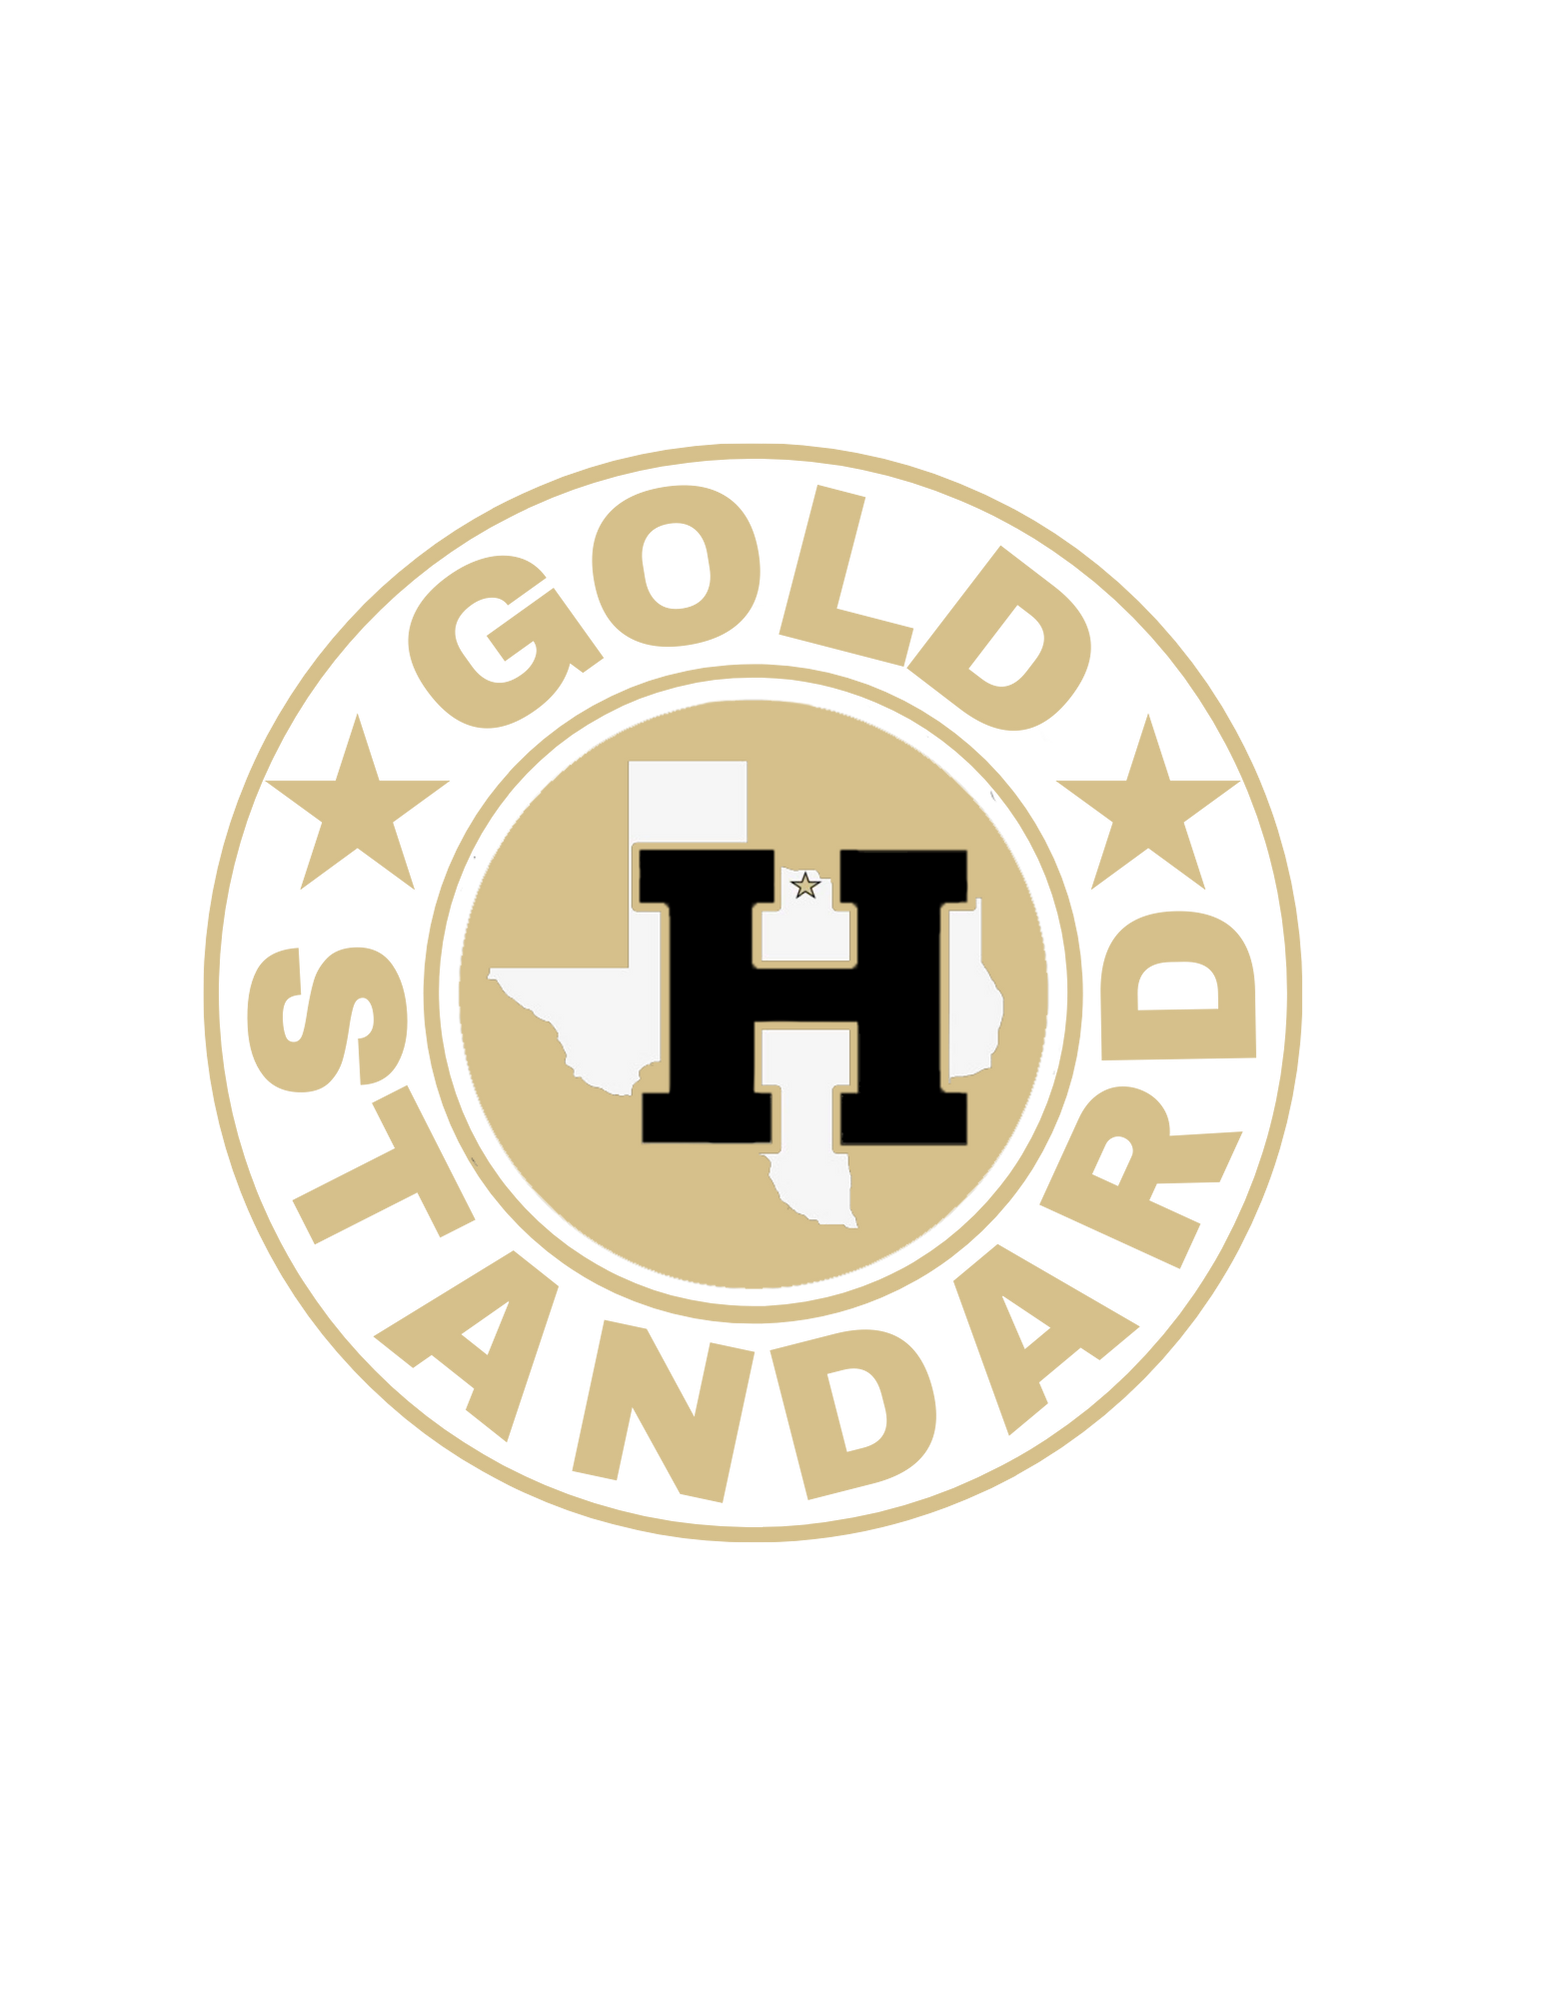 gold standard logo